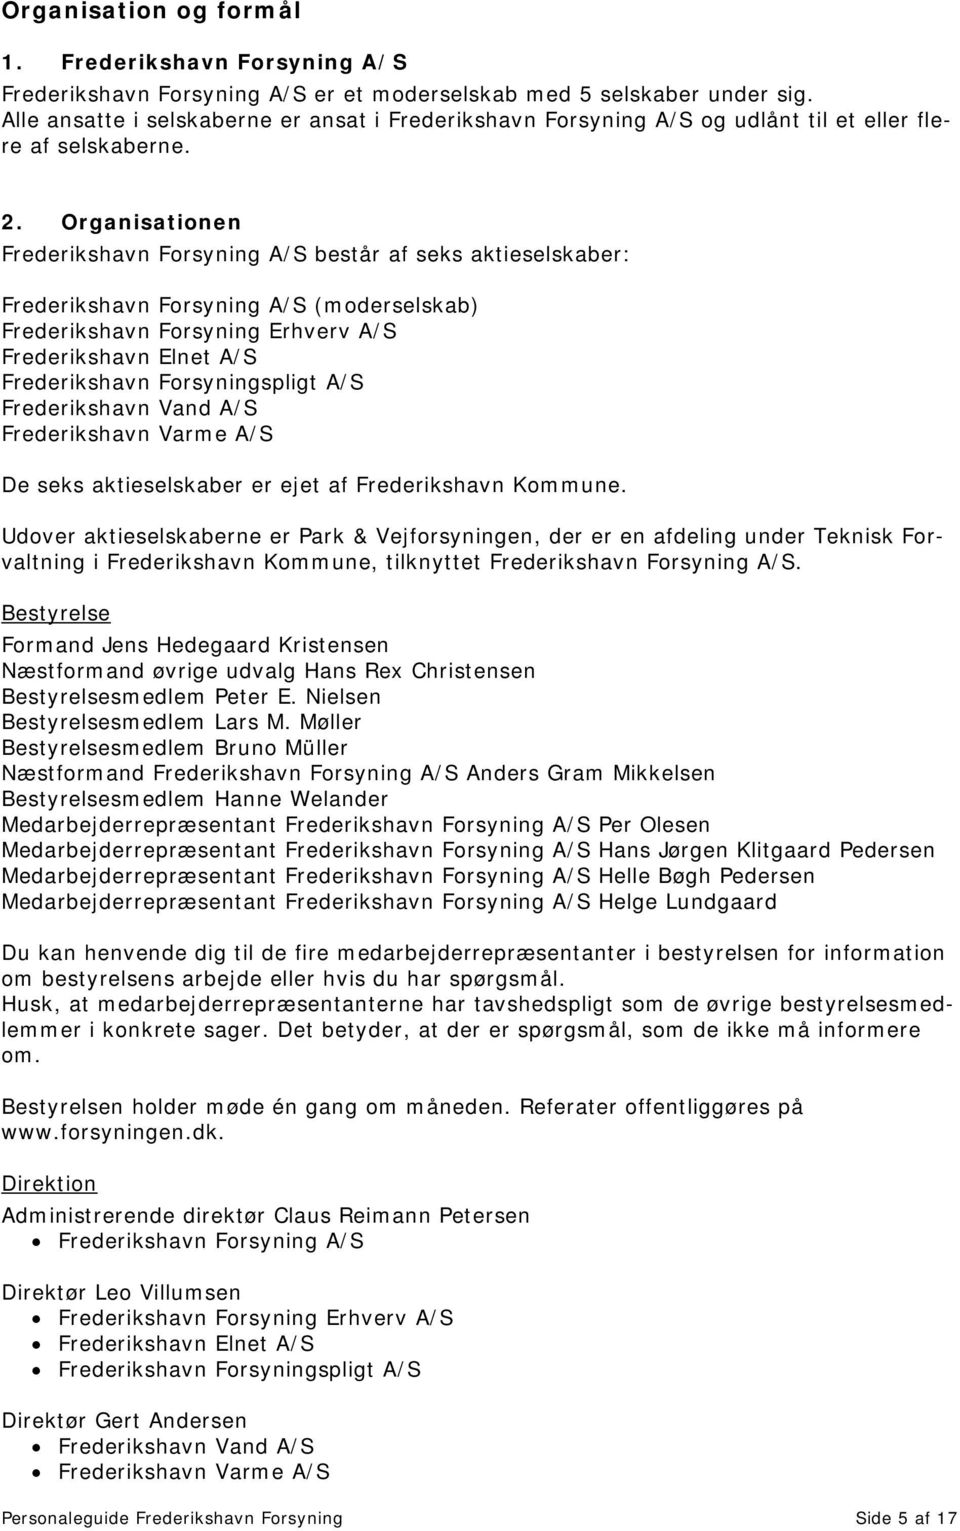 Organisationen Frederikshavn Forsyning A/S består af seks aktieselskaber: Frederikshavn Forsyning A/S (moderselskab) Frederikshavn Forsyning Erhverv A/S Frederikshavn Elnet A/S Frederikshavn